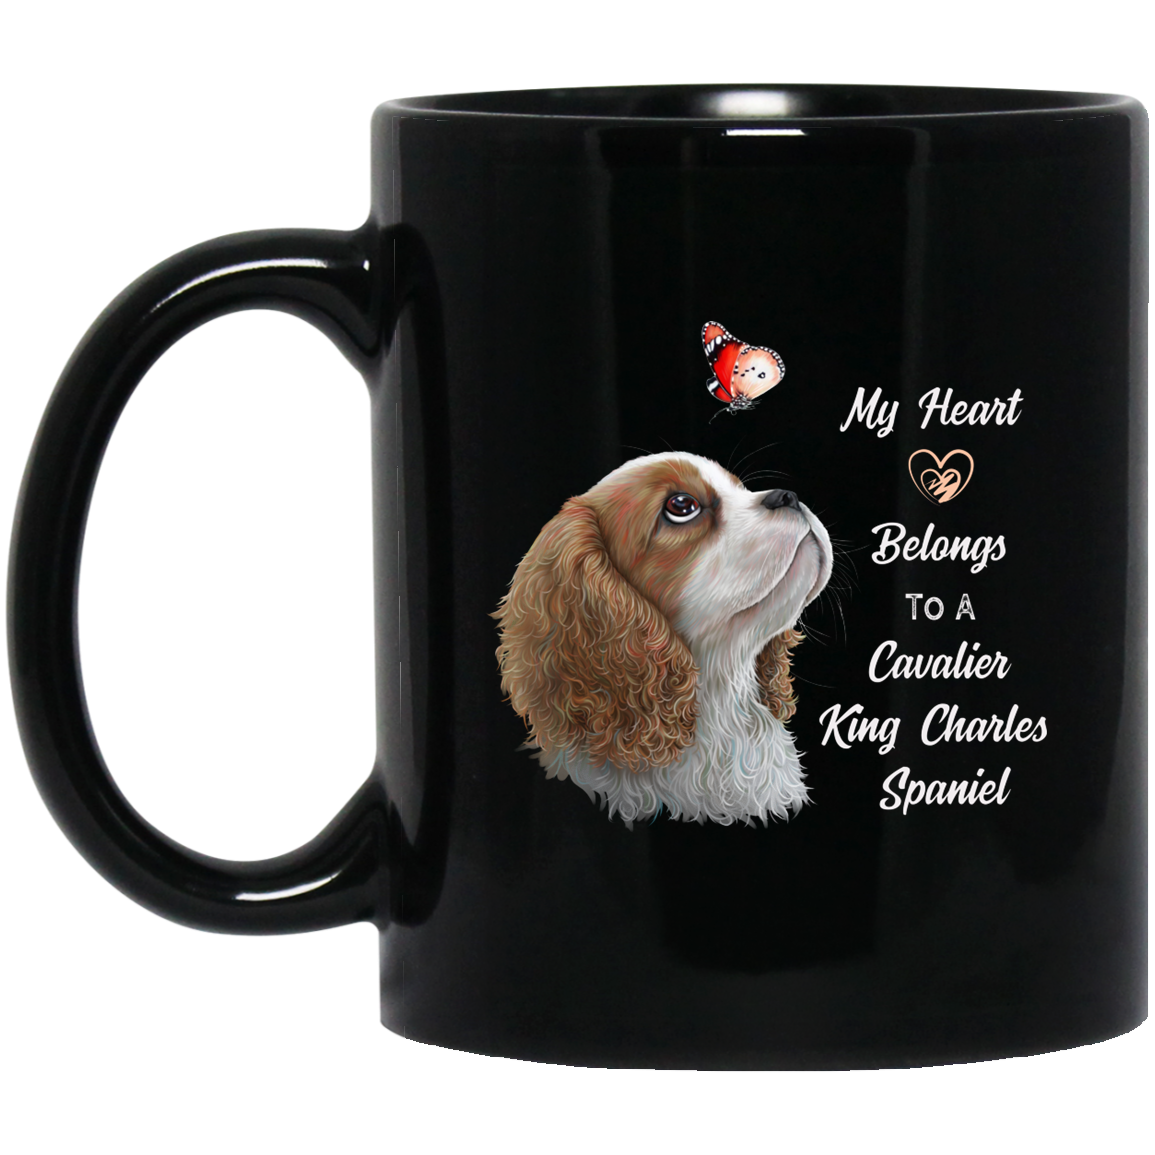 Cavalier King Charles Spaniel Gifts, Blenheim Cavalier, My Heart Belongs to a Cavalier mug - GoneBold.gift